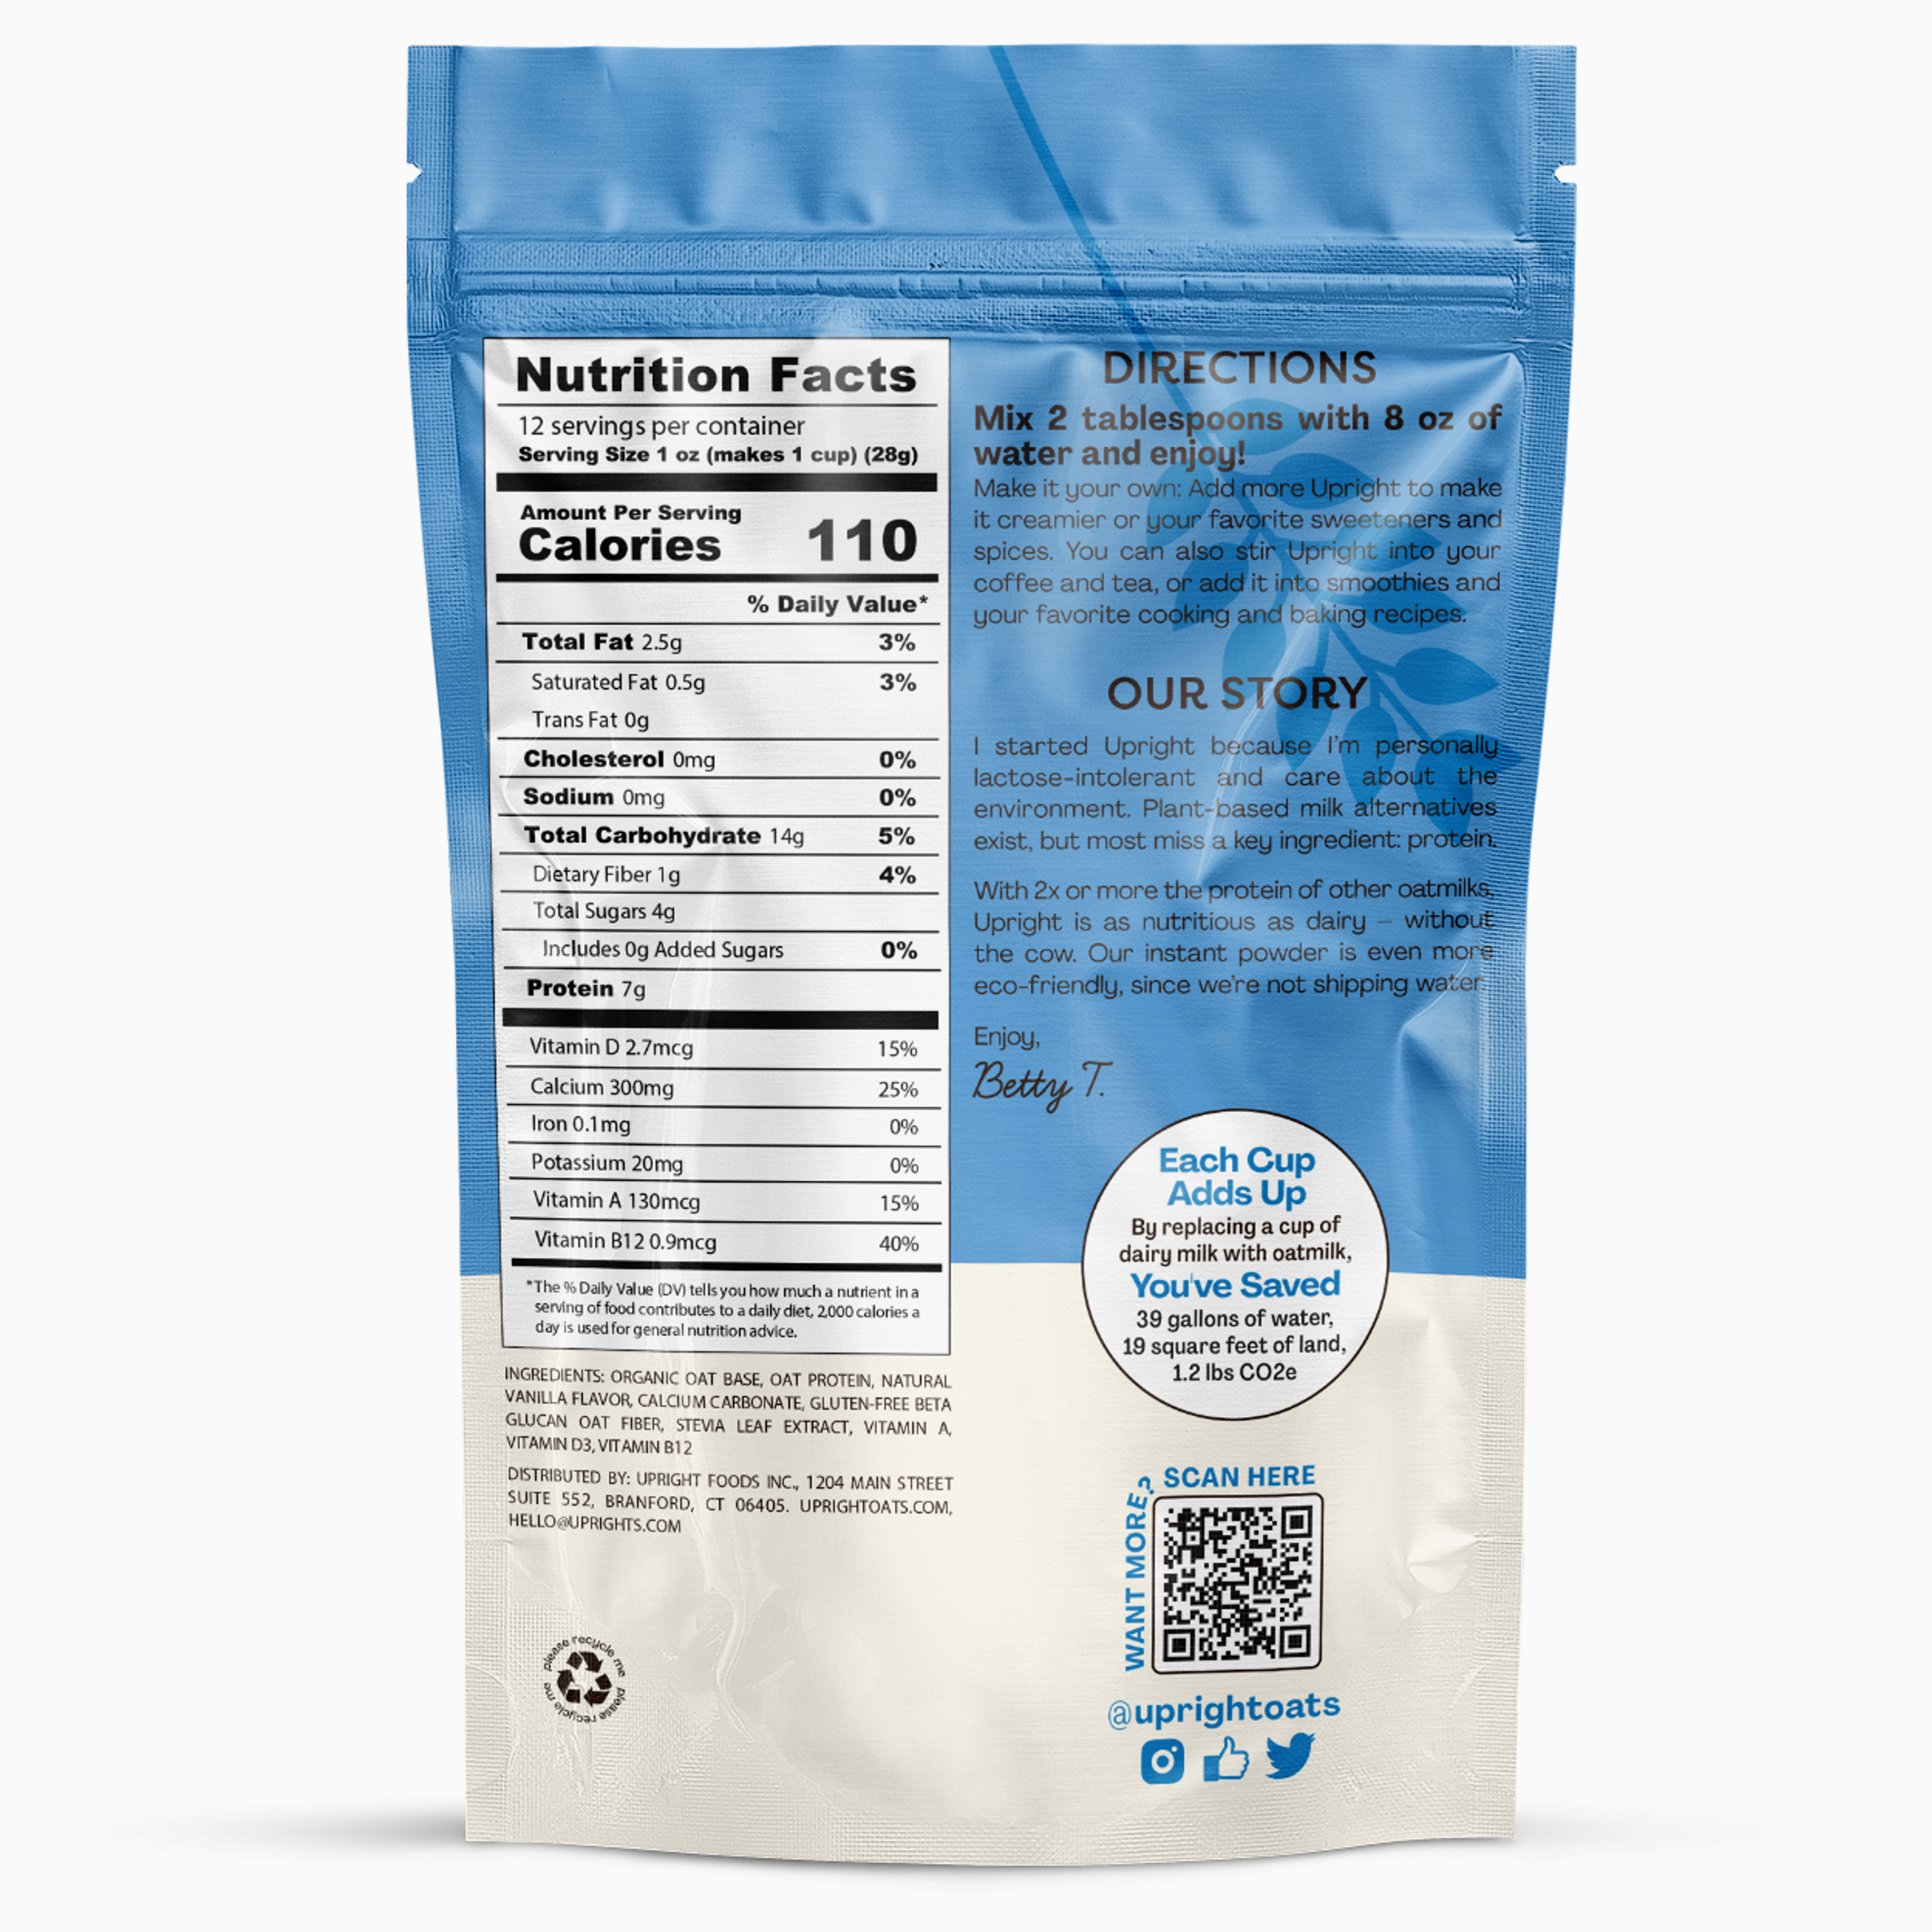 High-Protein Instant Oatmilk - Vanilla (12 Single Servings)